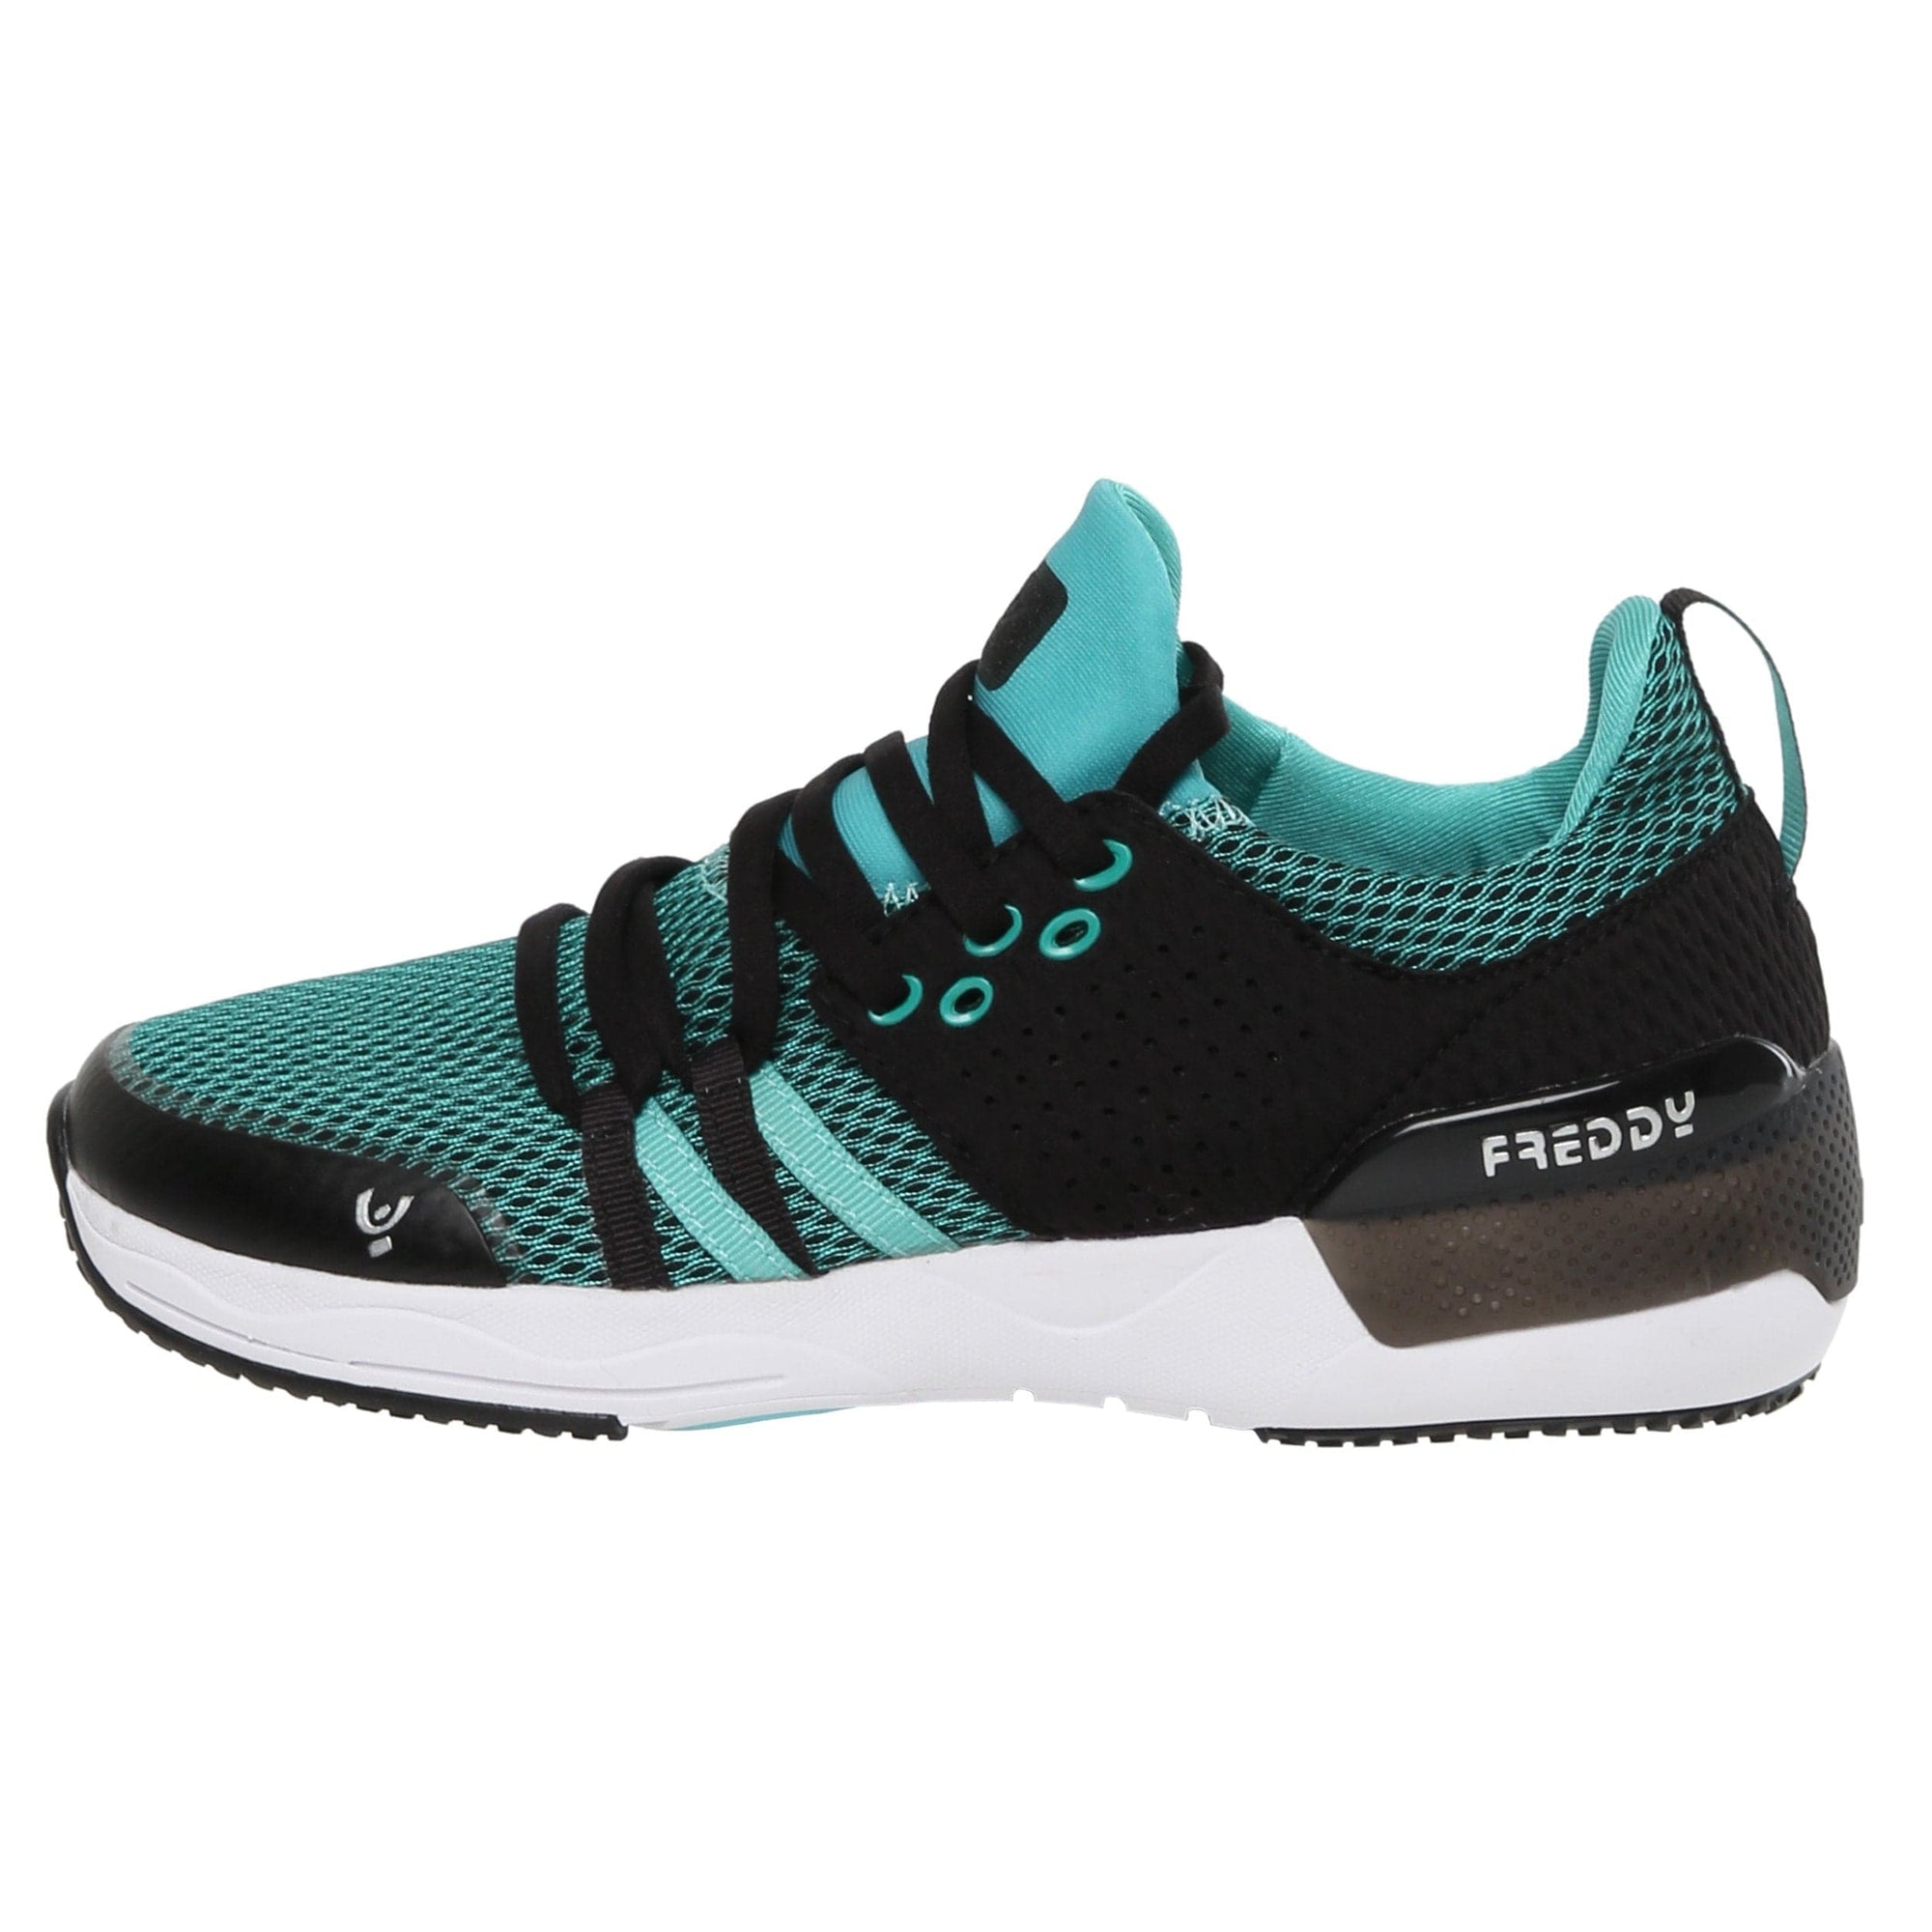 Neon Feline Skinair active breathability sport shoe - Turquoise 1